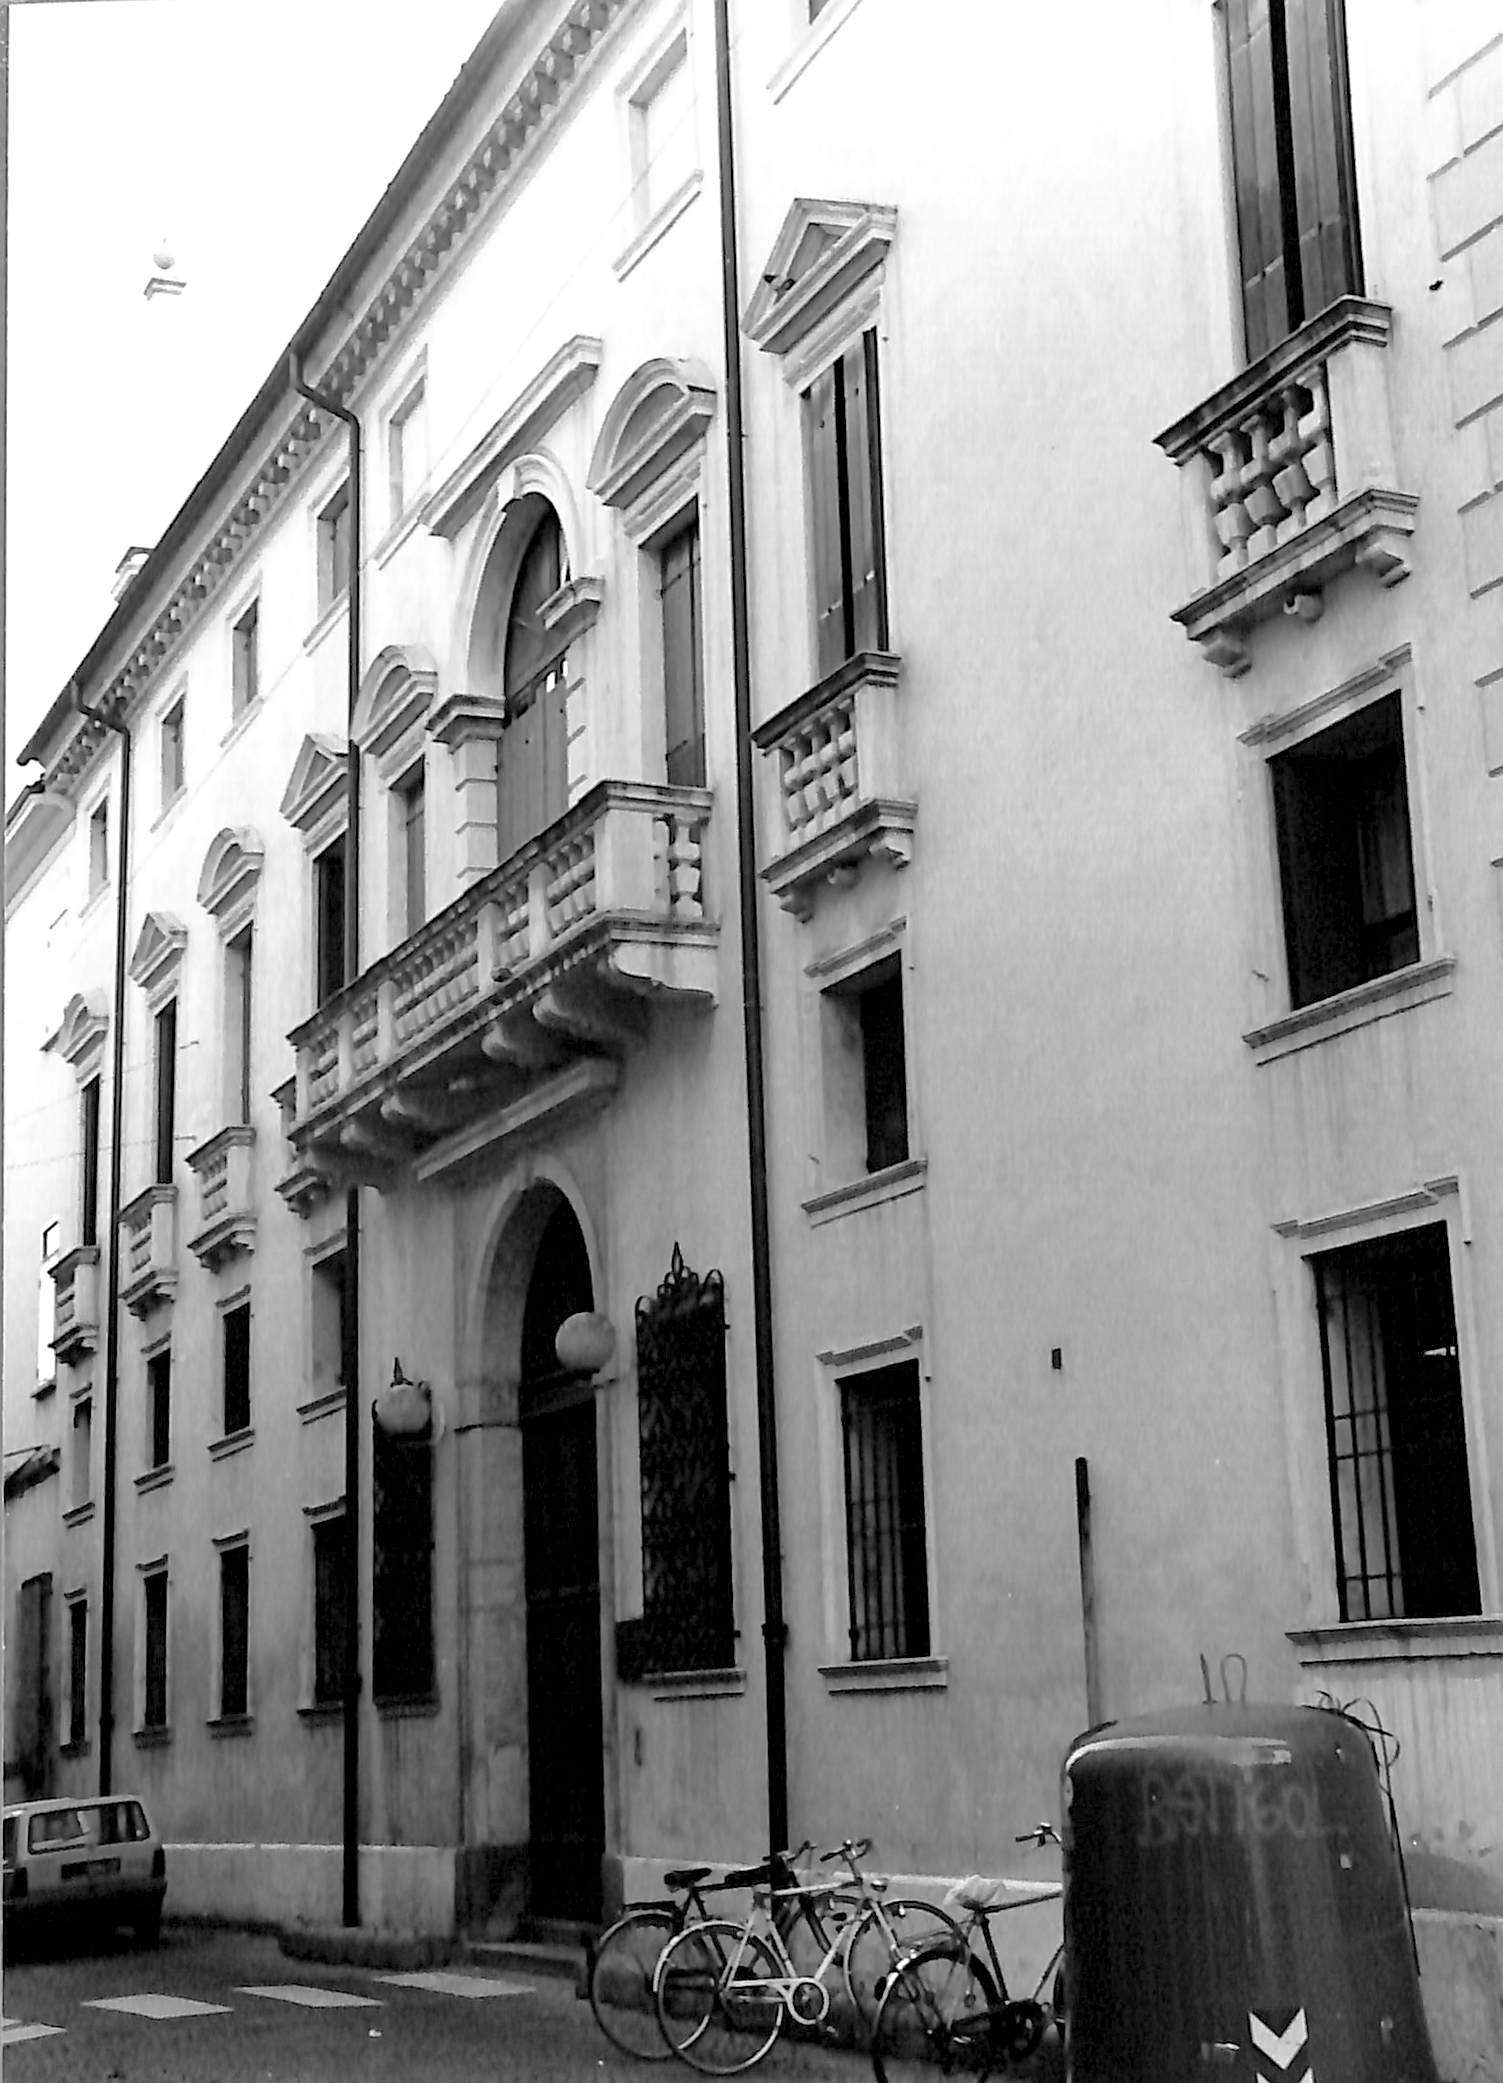 Palazzo Venezze (palazzo, nobiliare) - Rovigo (RO)  (XVIII)